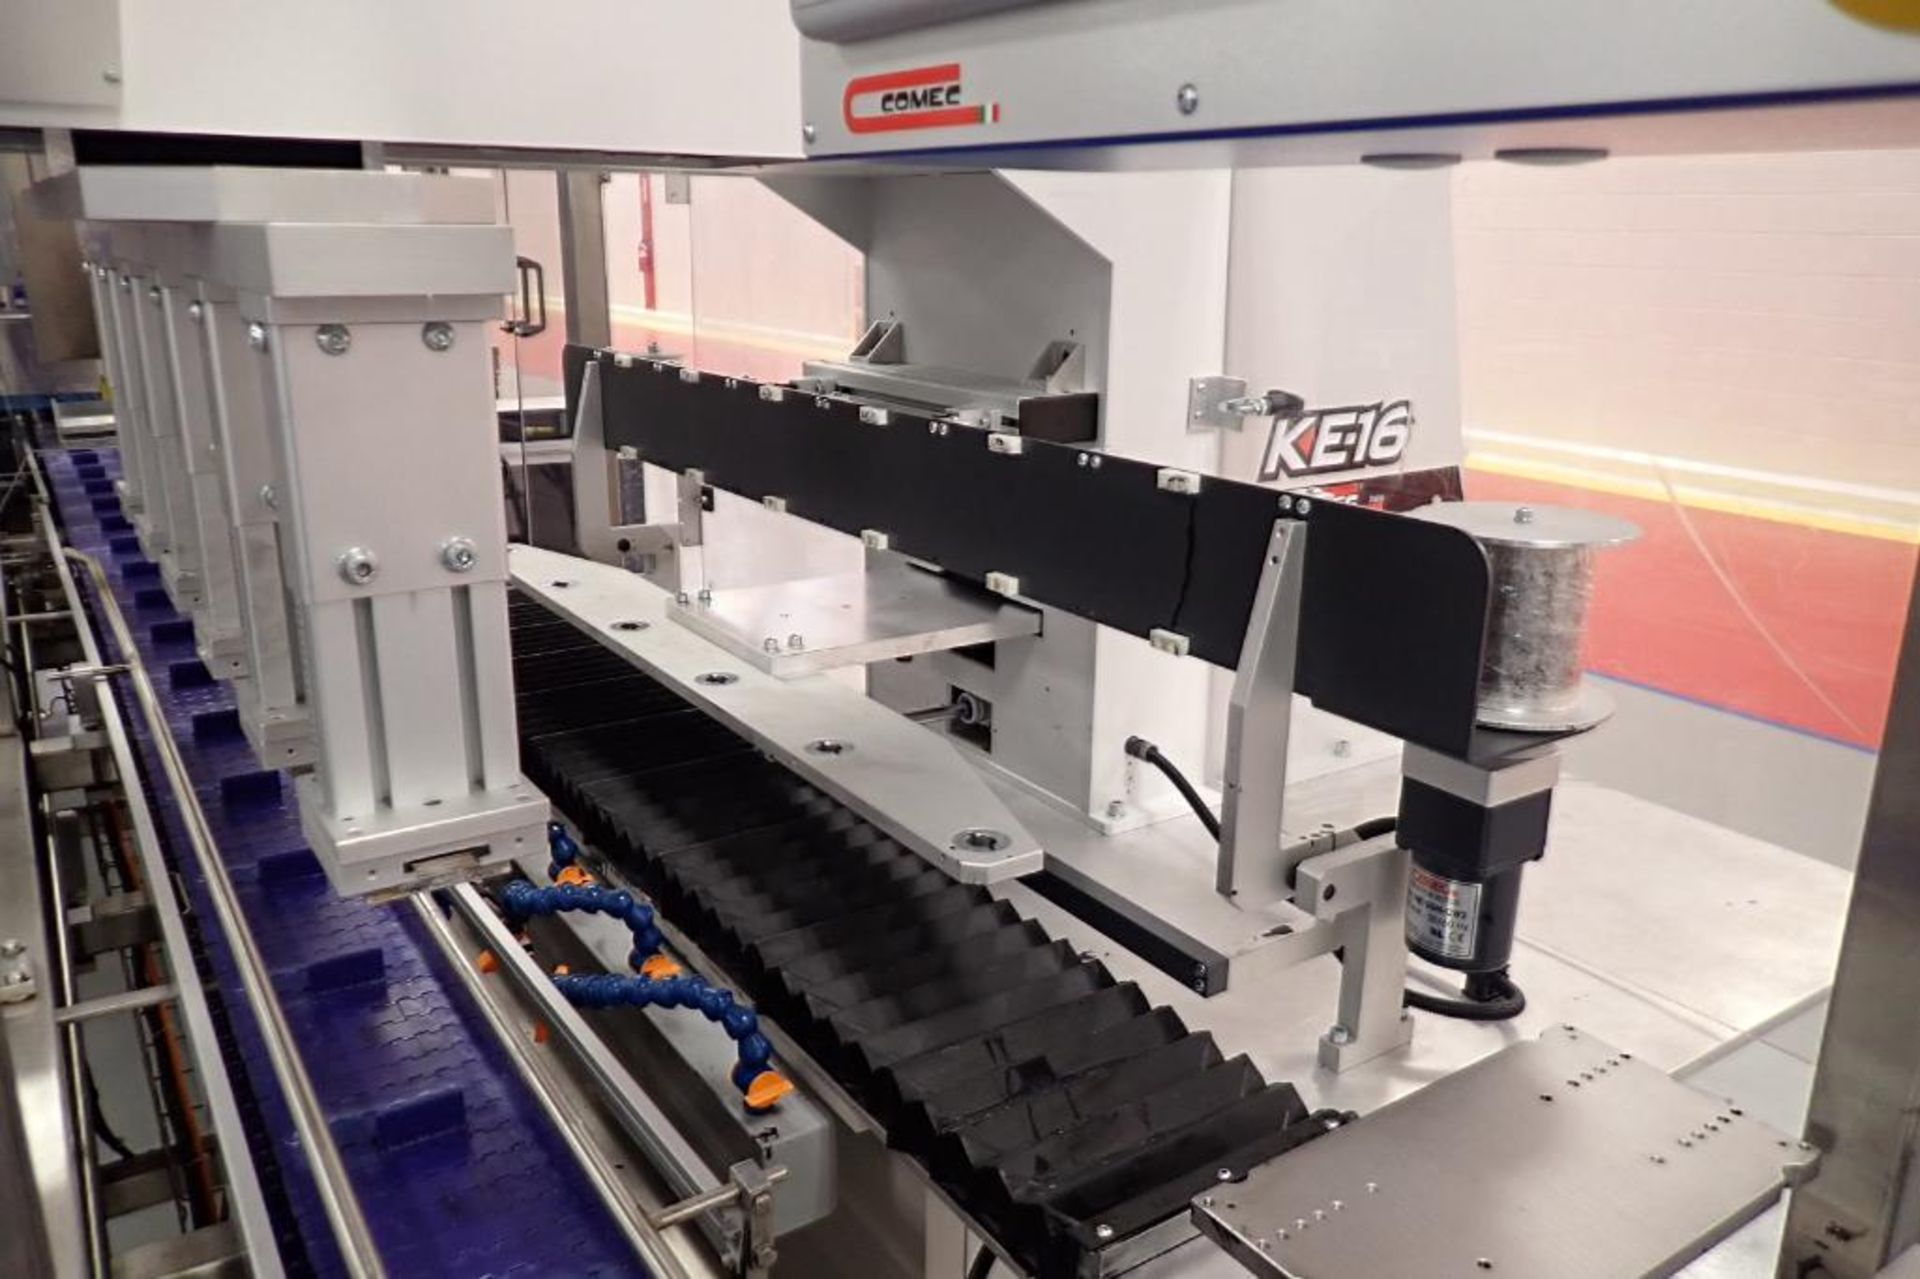 2015 Comec pad printing machine, Model KE166CE130, SN 10617, 6 spot, Allen Bradley panelview plus - Image 6 of 32